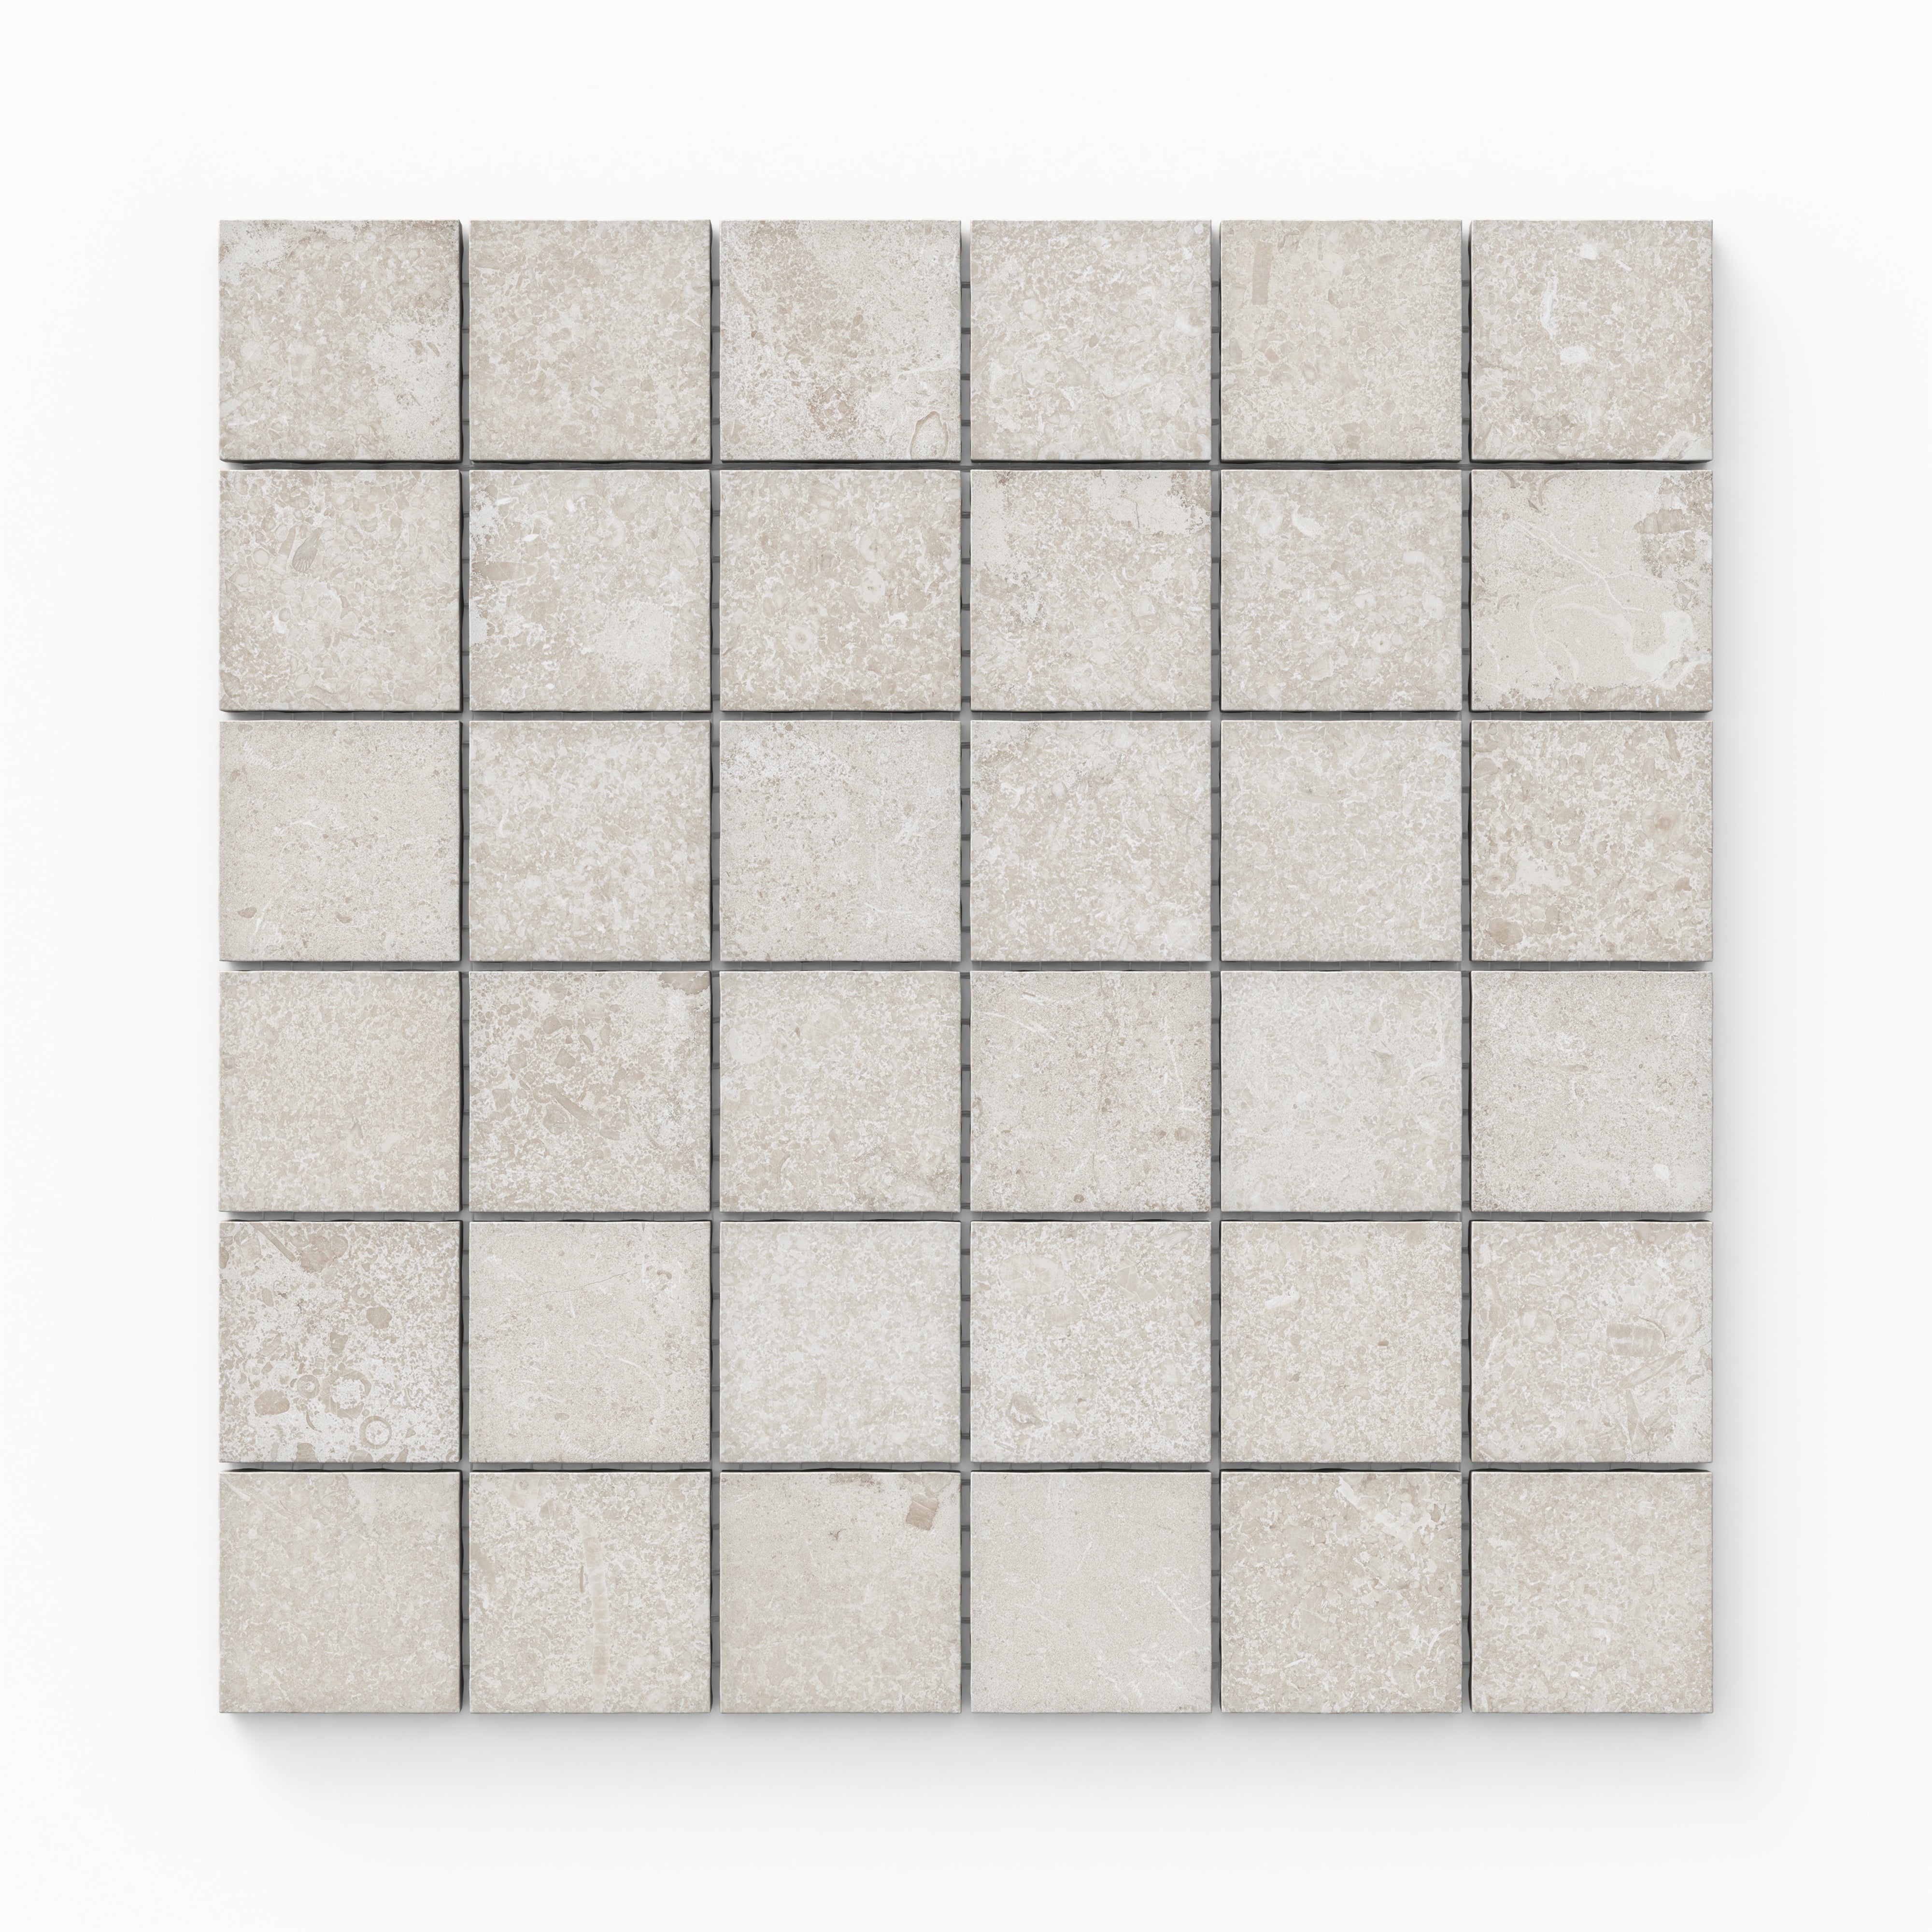 Tatum 2x2 Matte Porcelain Mosaic Tile in Cross-Cut Sand